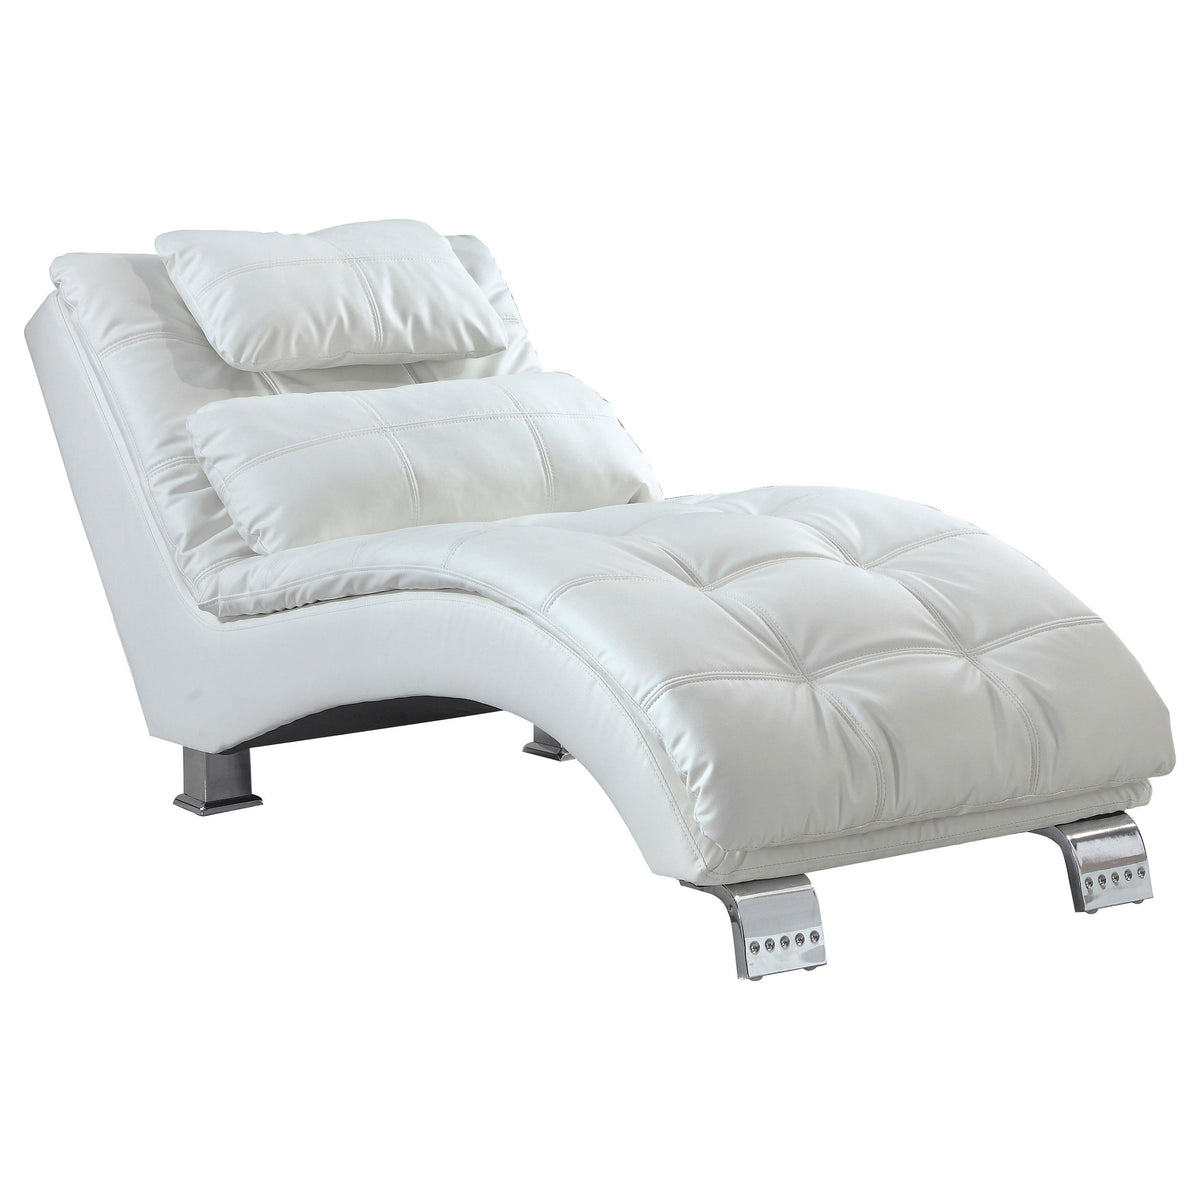 Dilleston Upholstered Chaise White Dilleston Upholstered Chaise White Half Price Furniture